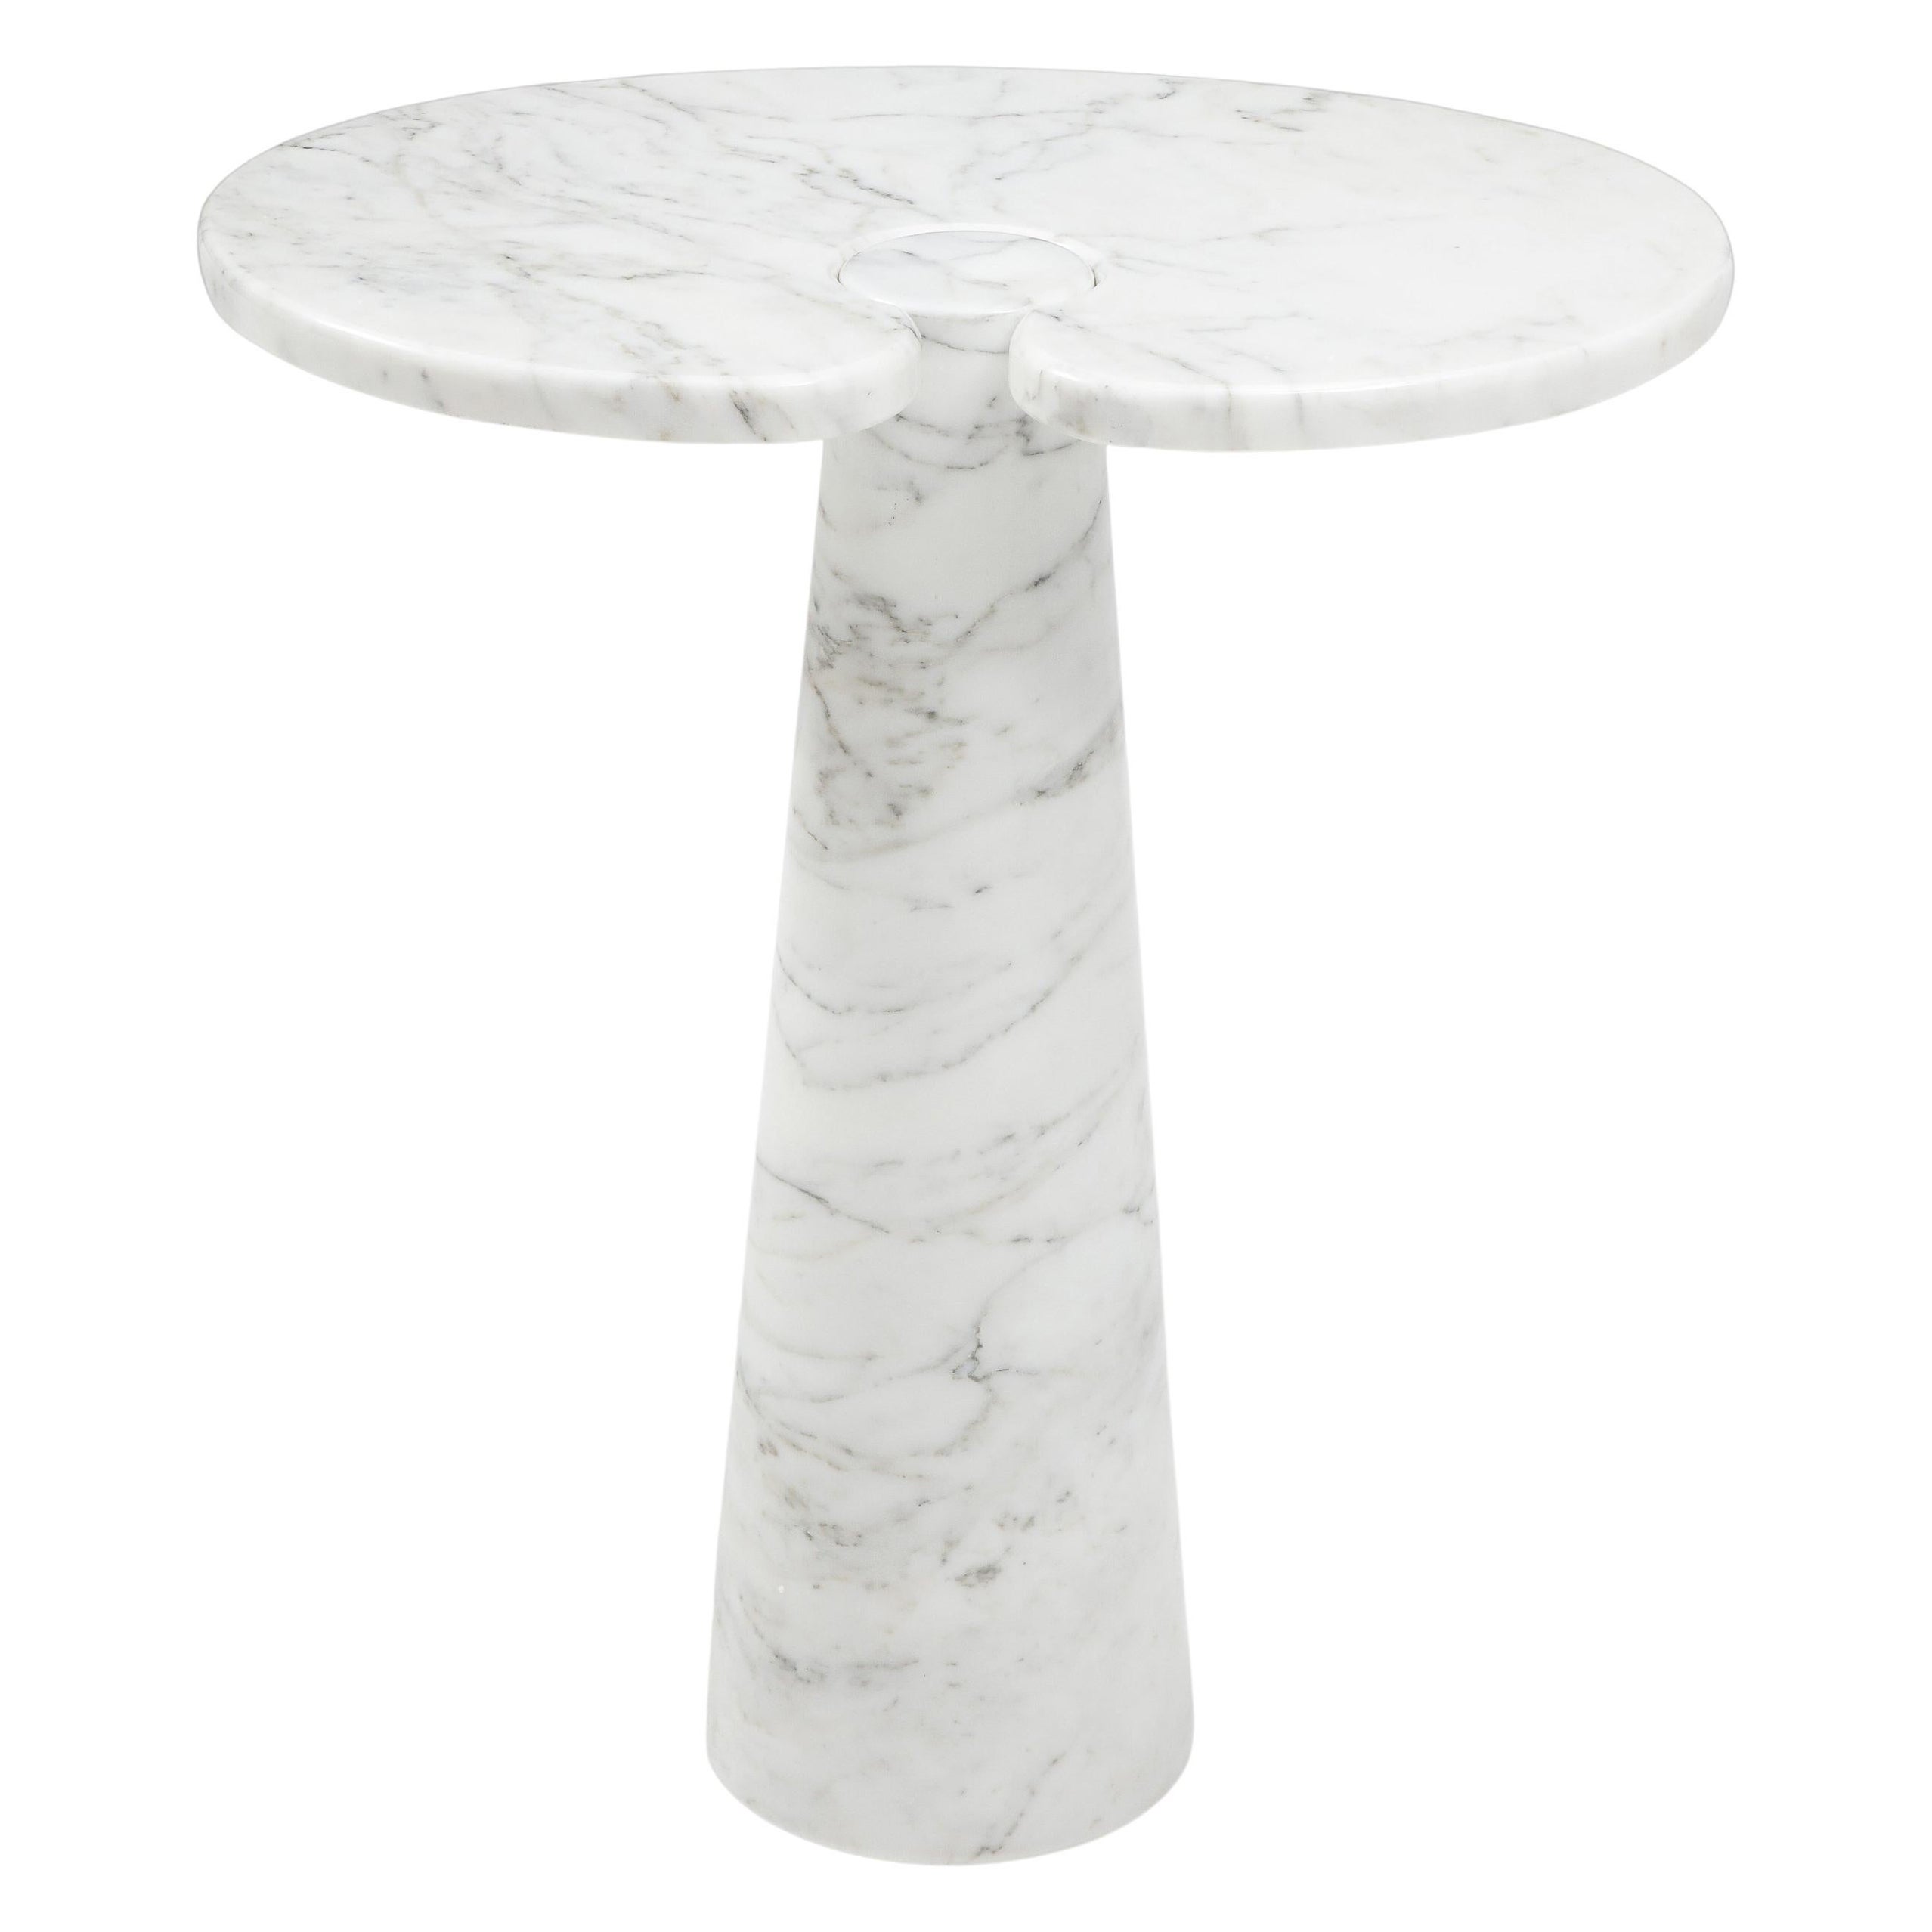 Angelo Mangiarotti Carrara Marble Tall Side Table from Eros Series, 1971